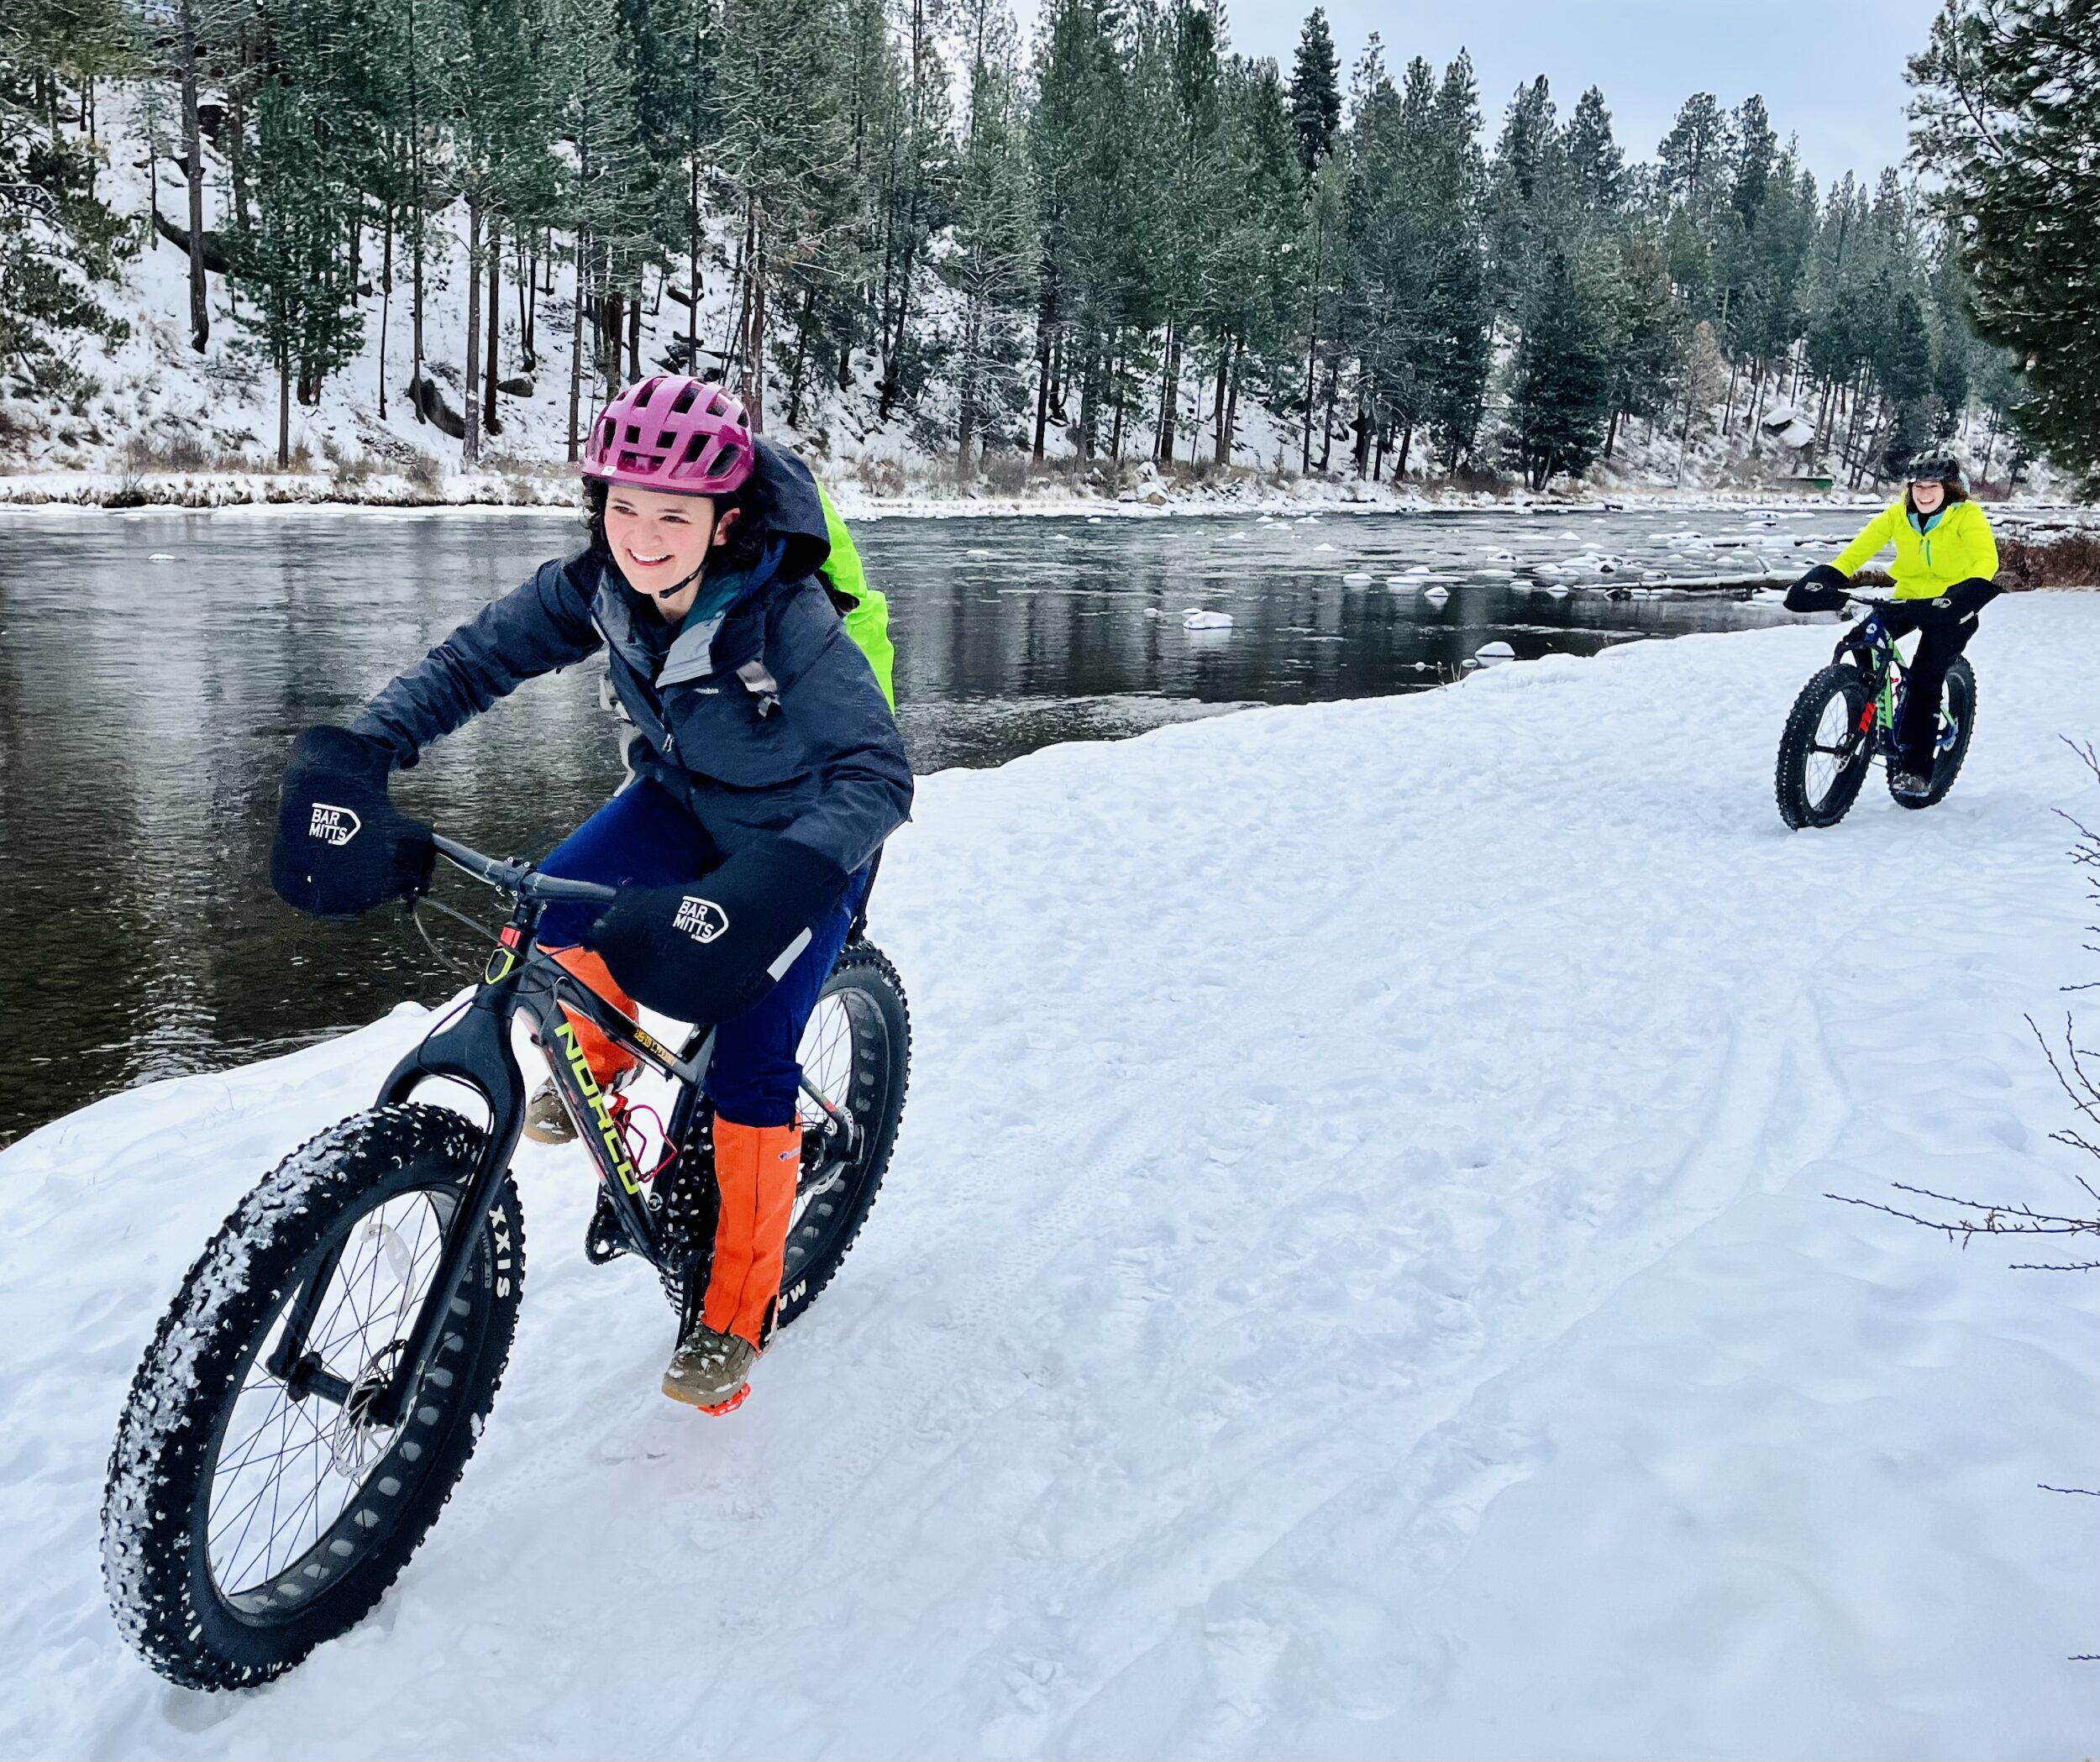 Fat bike riding on snow in Oregon